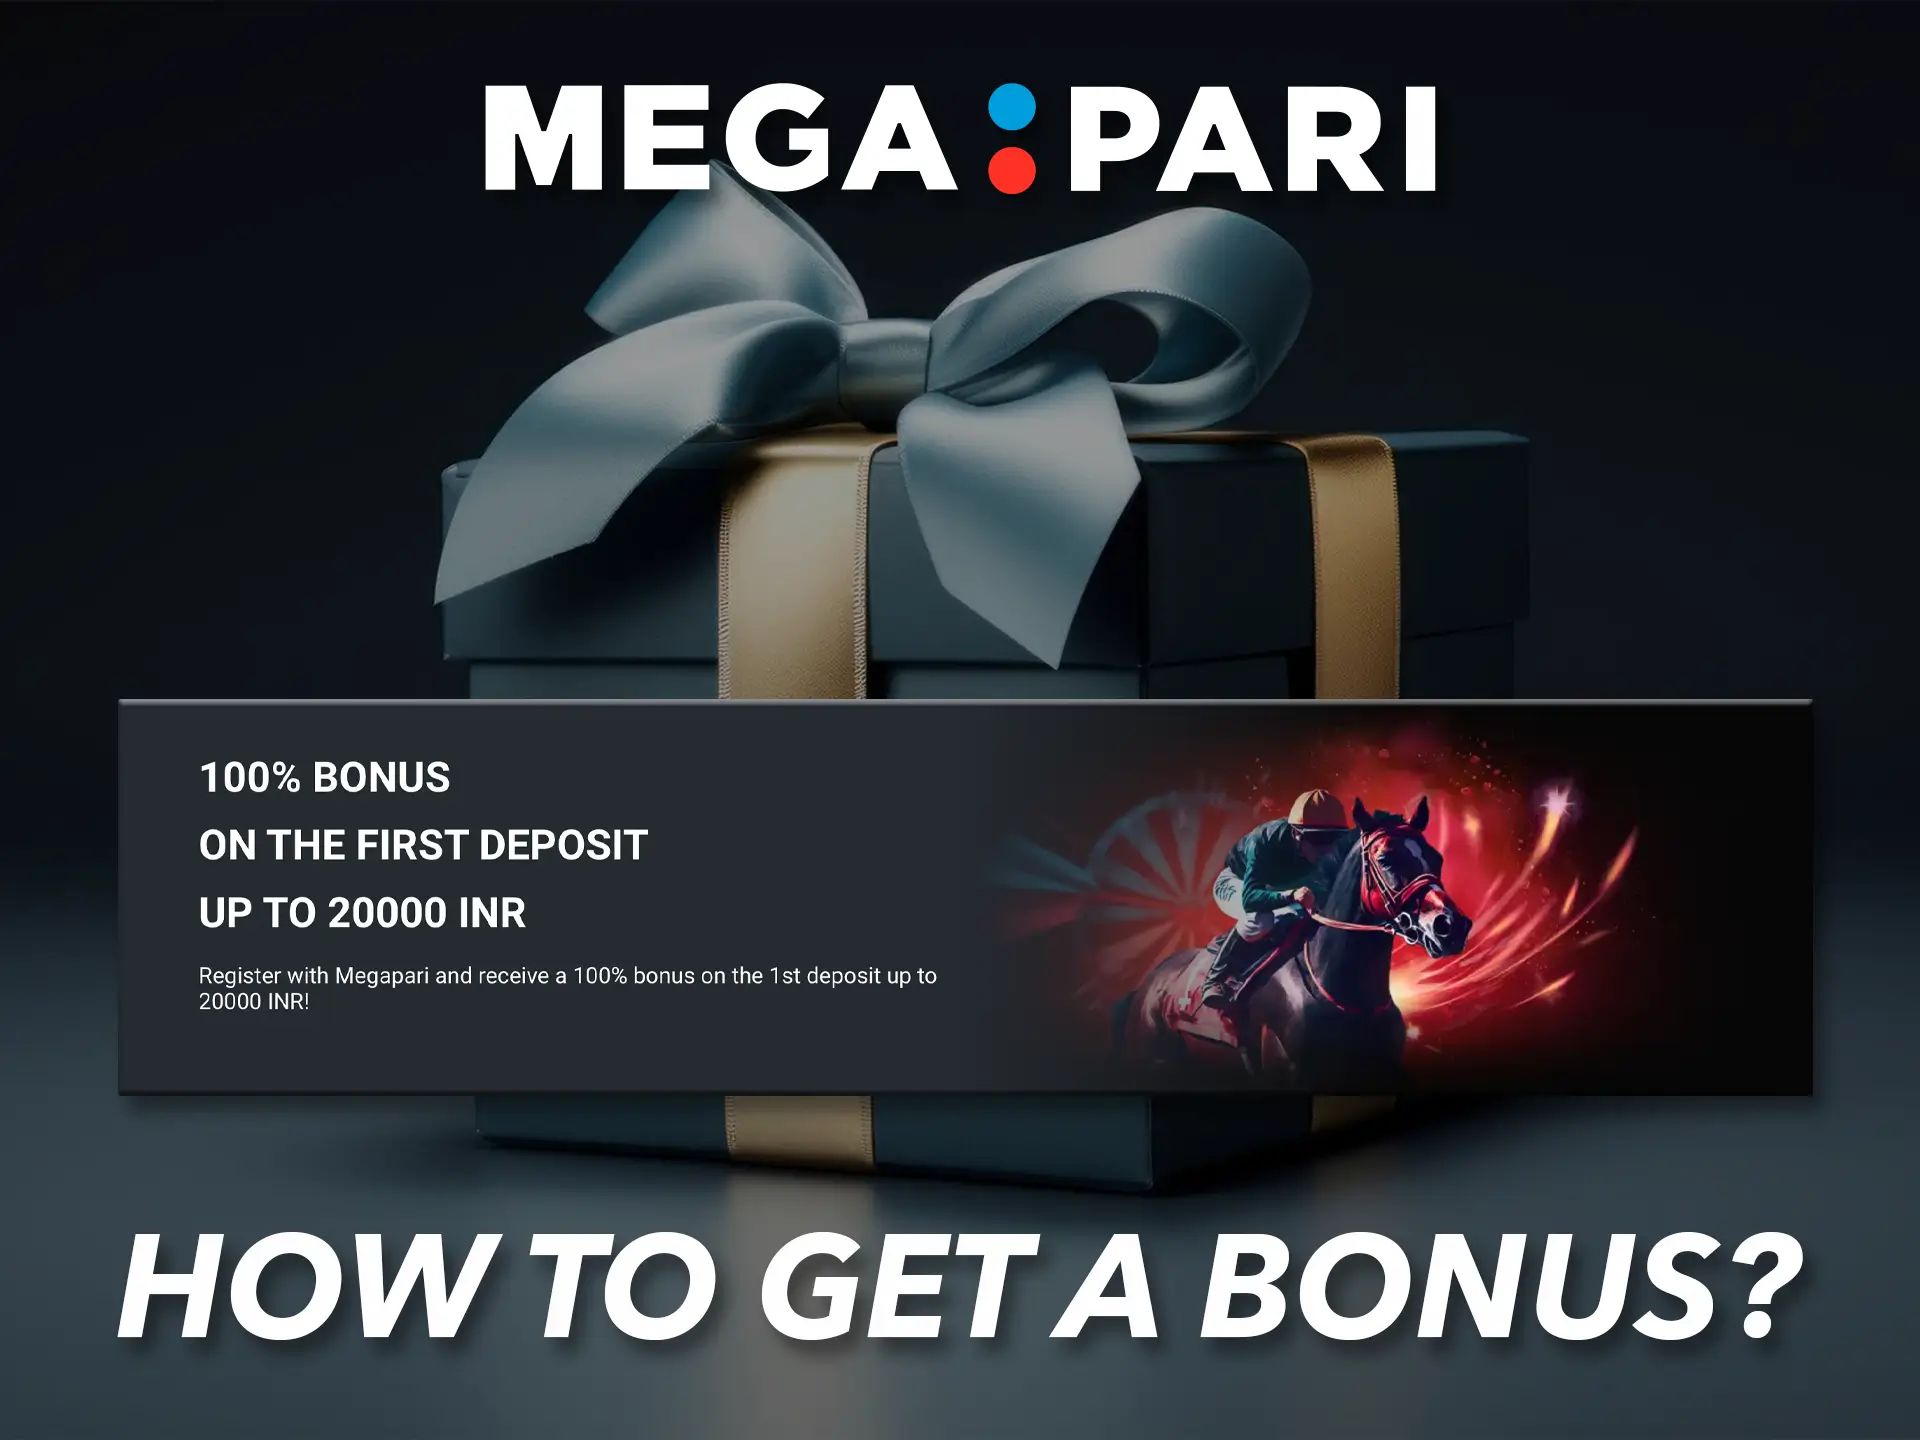 Use Megapari's bonus program to increase your chances of winning.